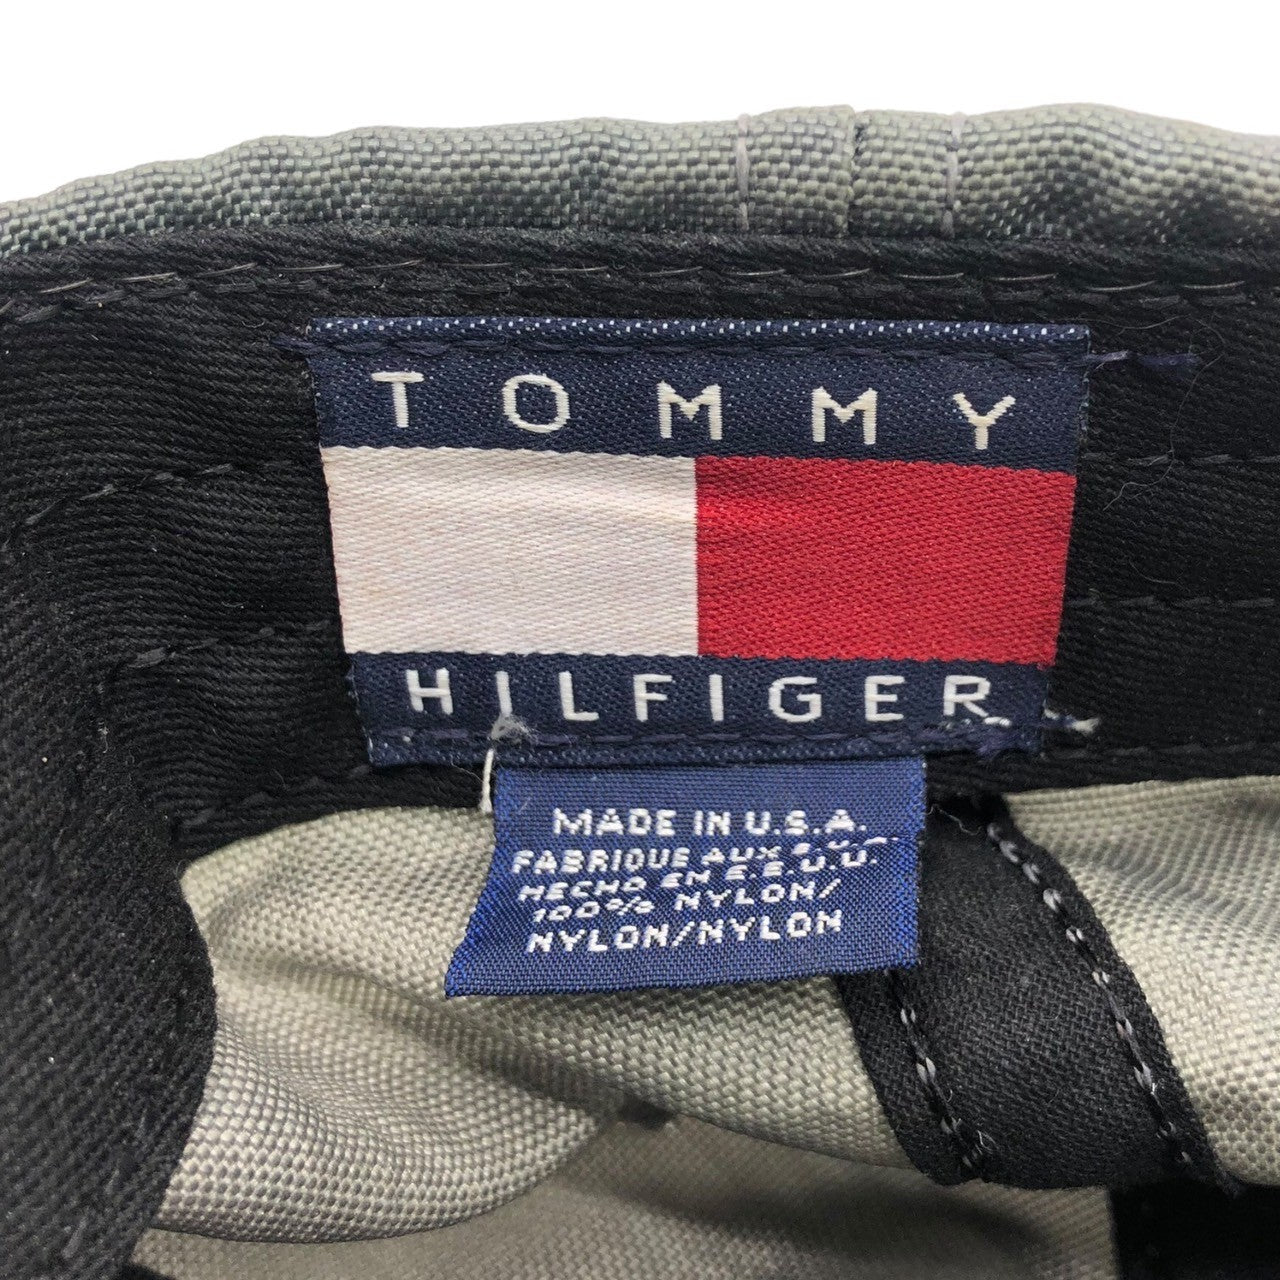 TOMMY HILFIGER(トミーヒルフィガー) 90's 6panel nylon logo cap 6パネル ナイロン ロゴ キャップ 90年代 MADE IN USA グレー